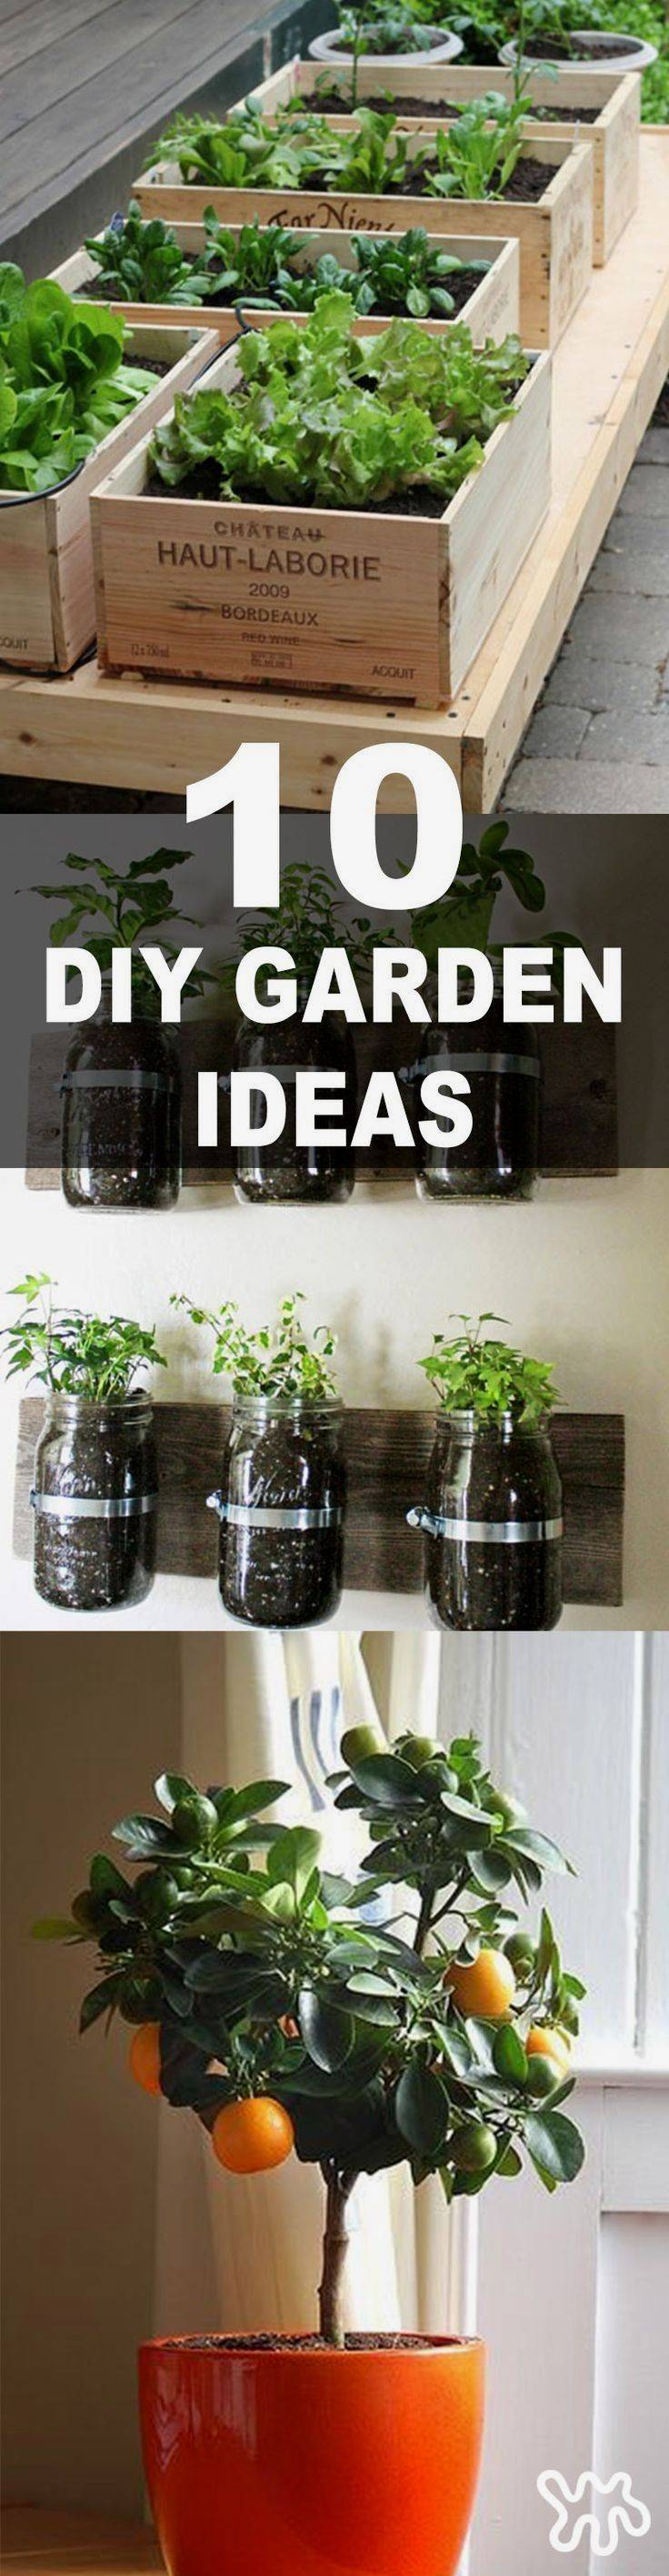 Vertical Hydroponics Gardening Ideas